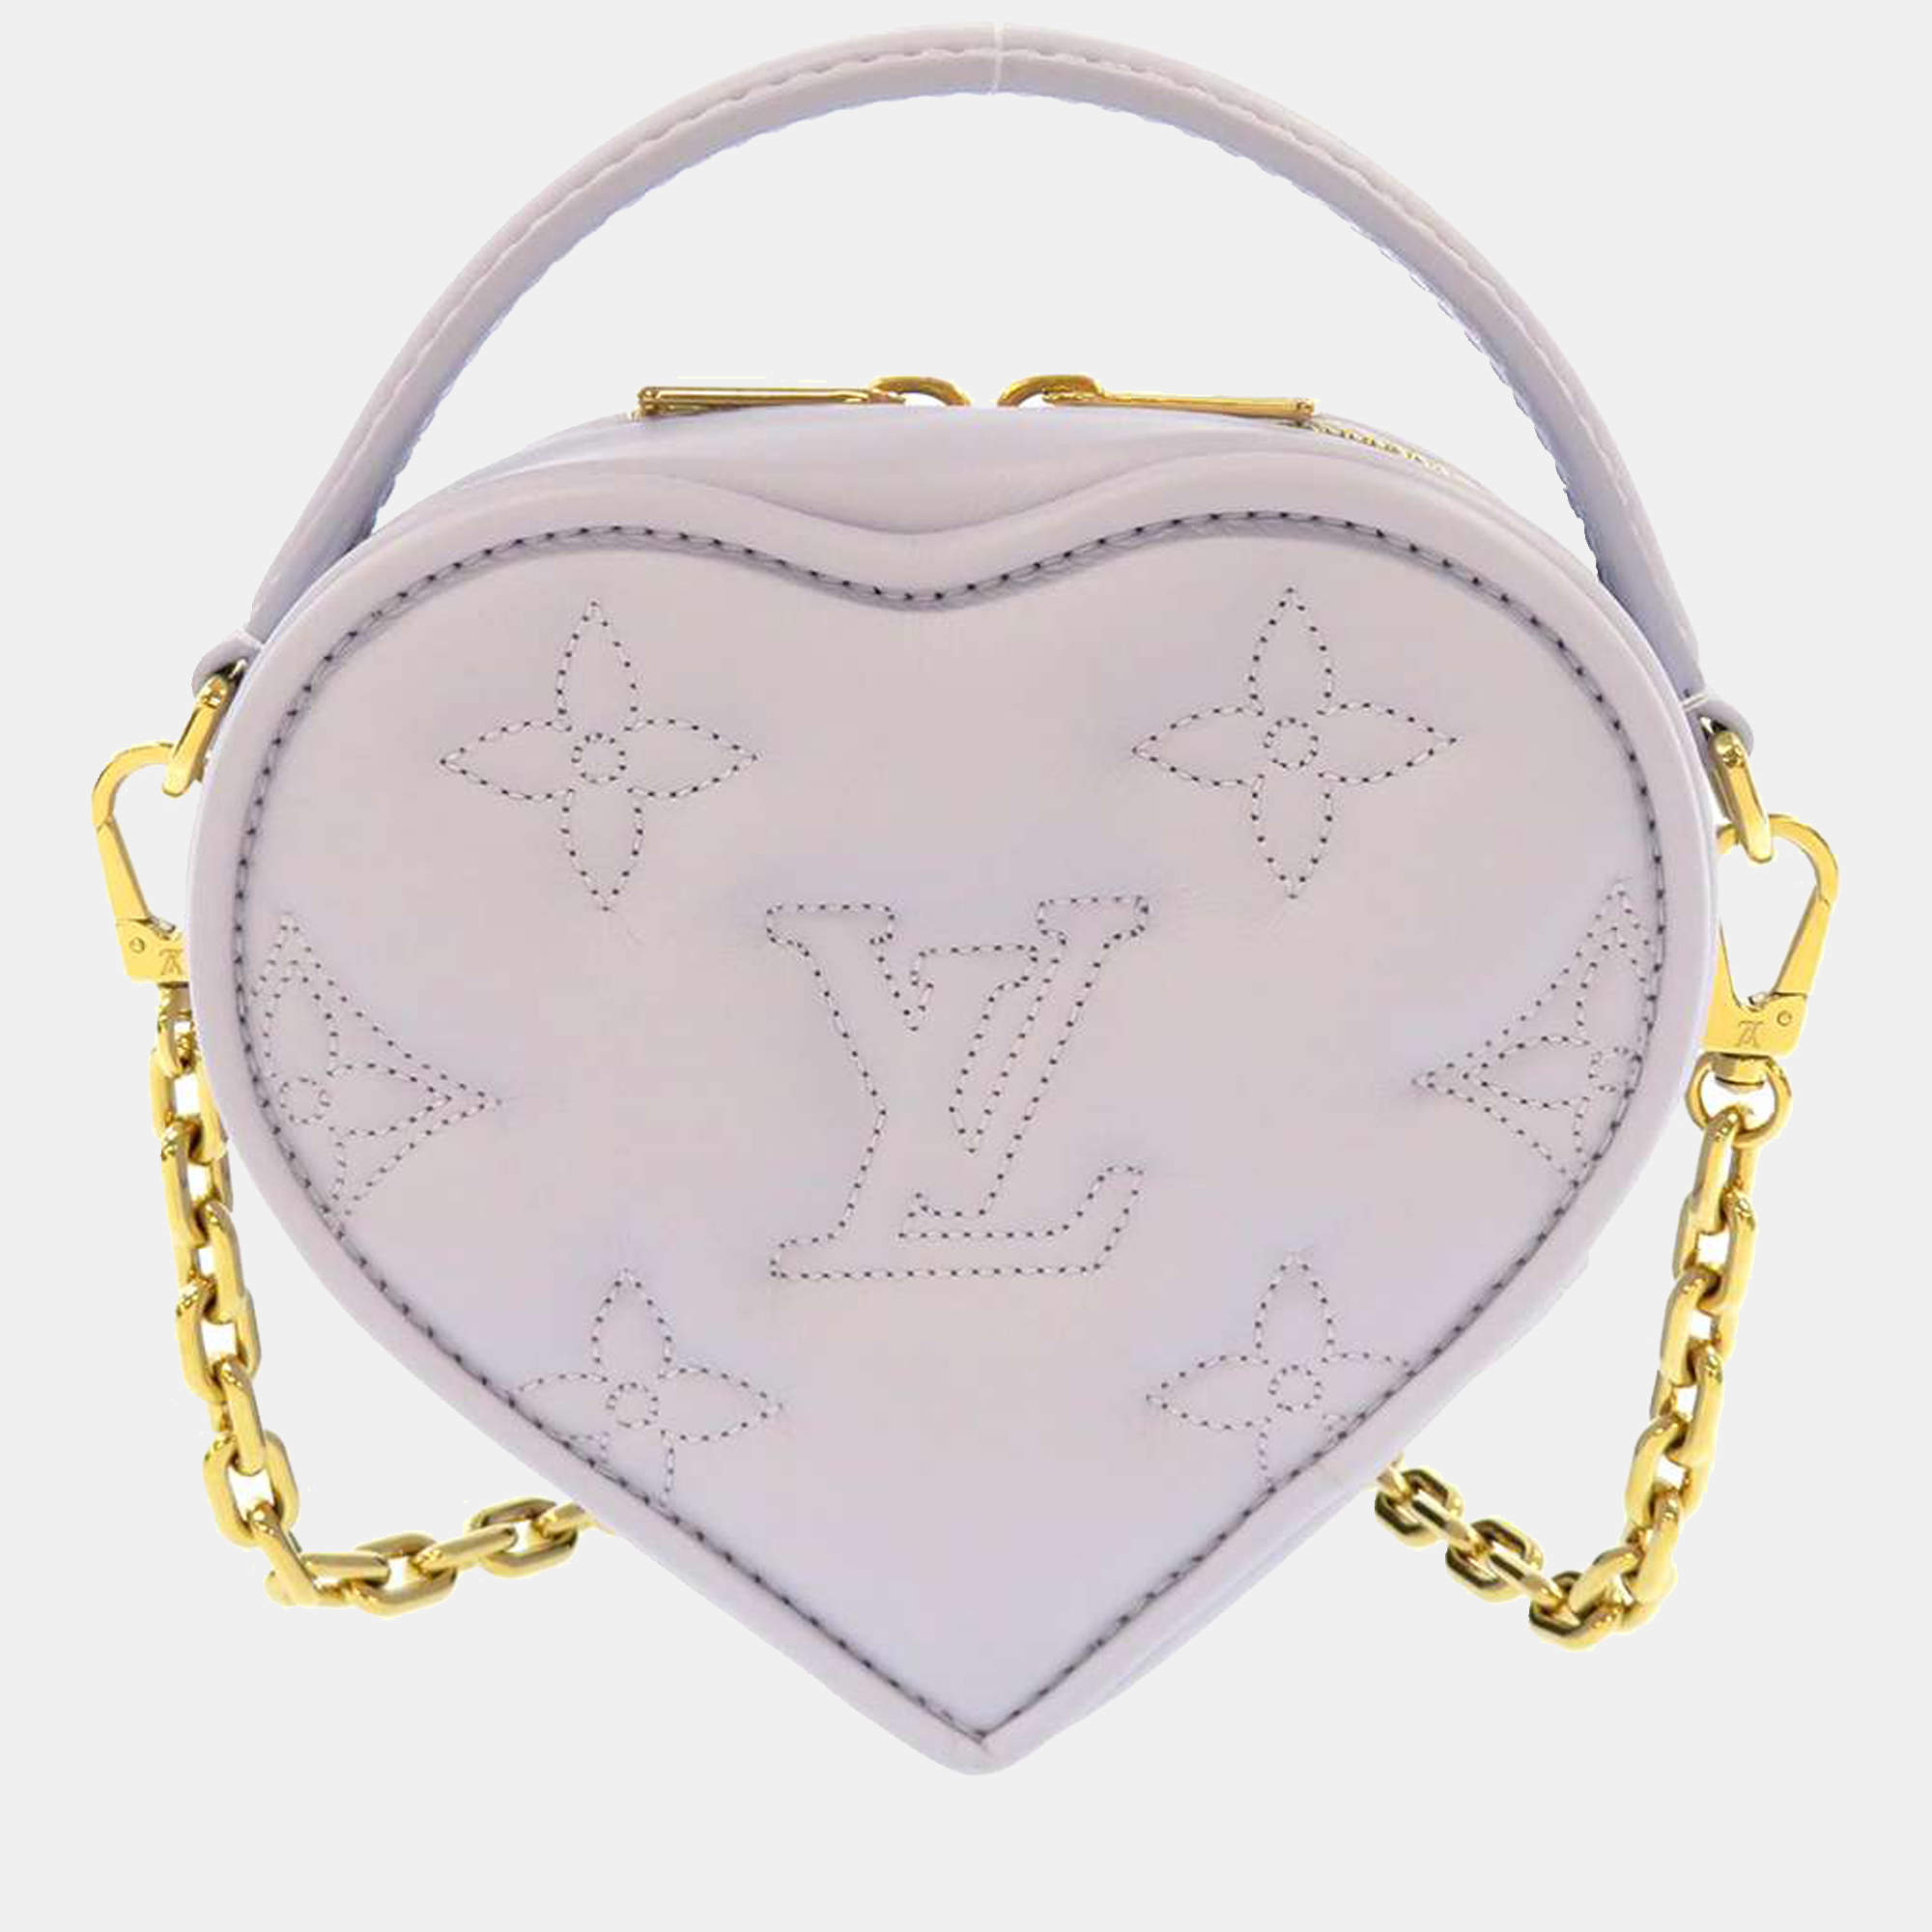 Louis Vuitton Heart-Shaped Bag  Bags, Heart shaped bag, Luxury bags